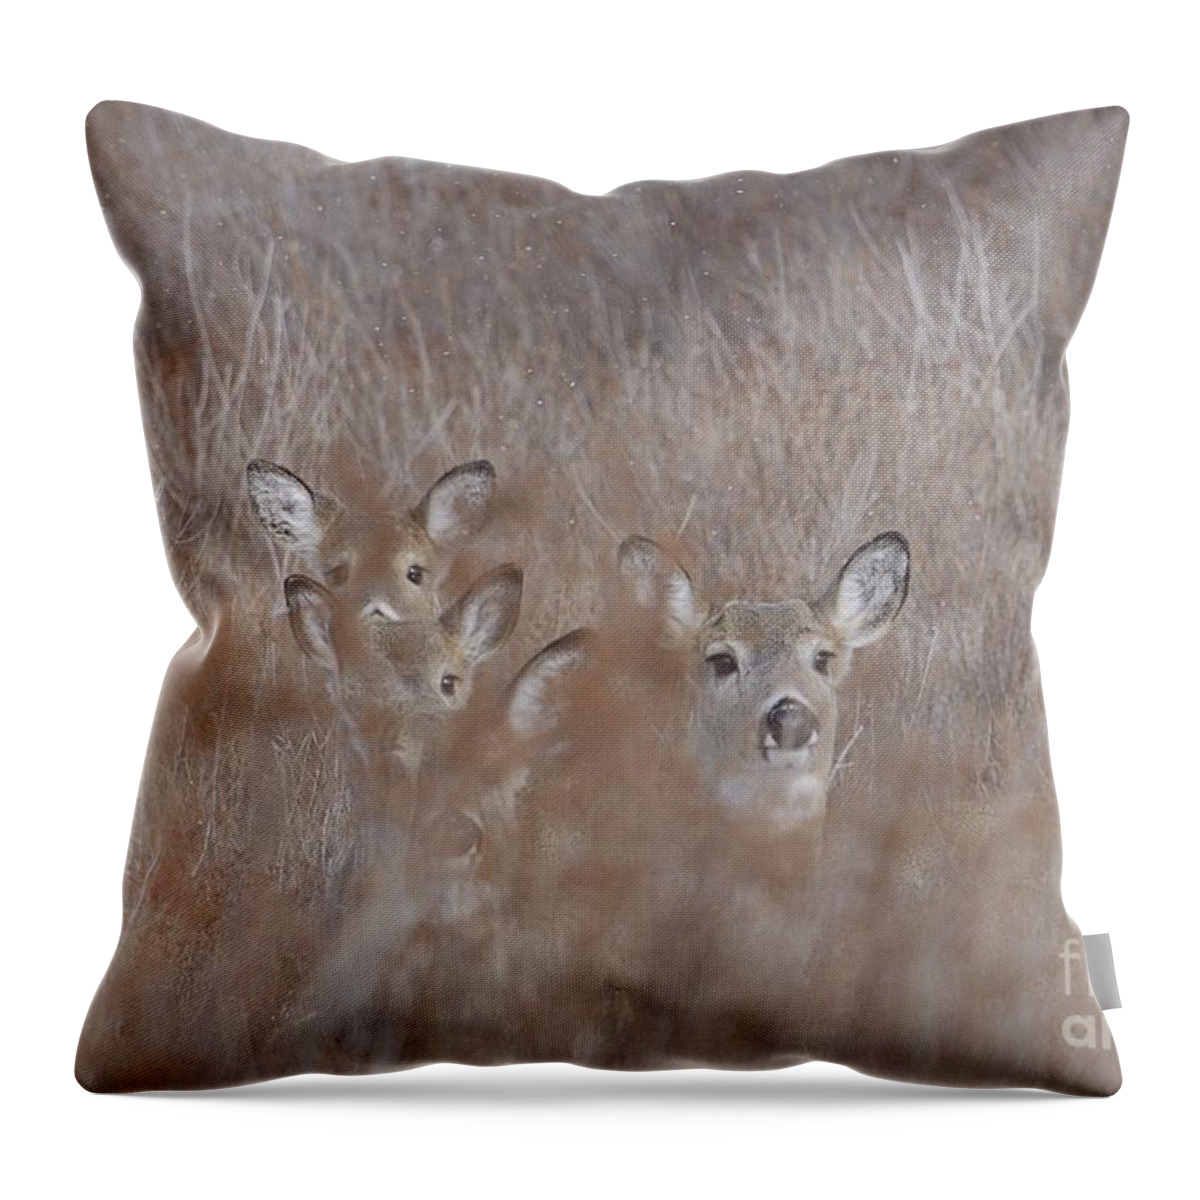 Winter Deer Throw Pillow featuring the photograph Deer Soft by Randy Bodkins